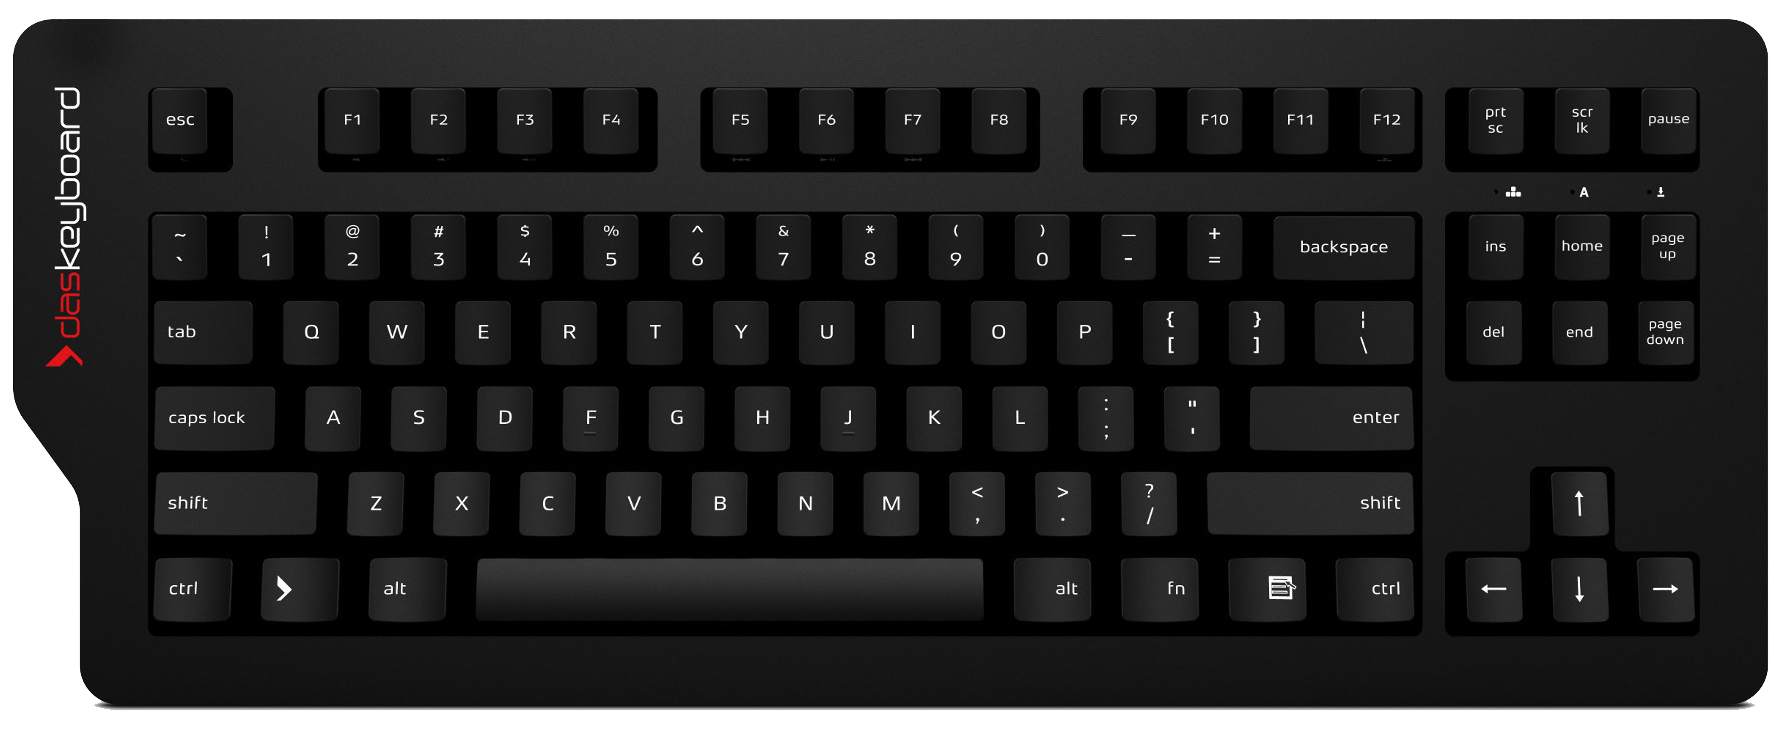 keyboard, Black Keyboard, Des